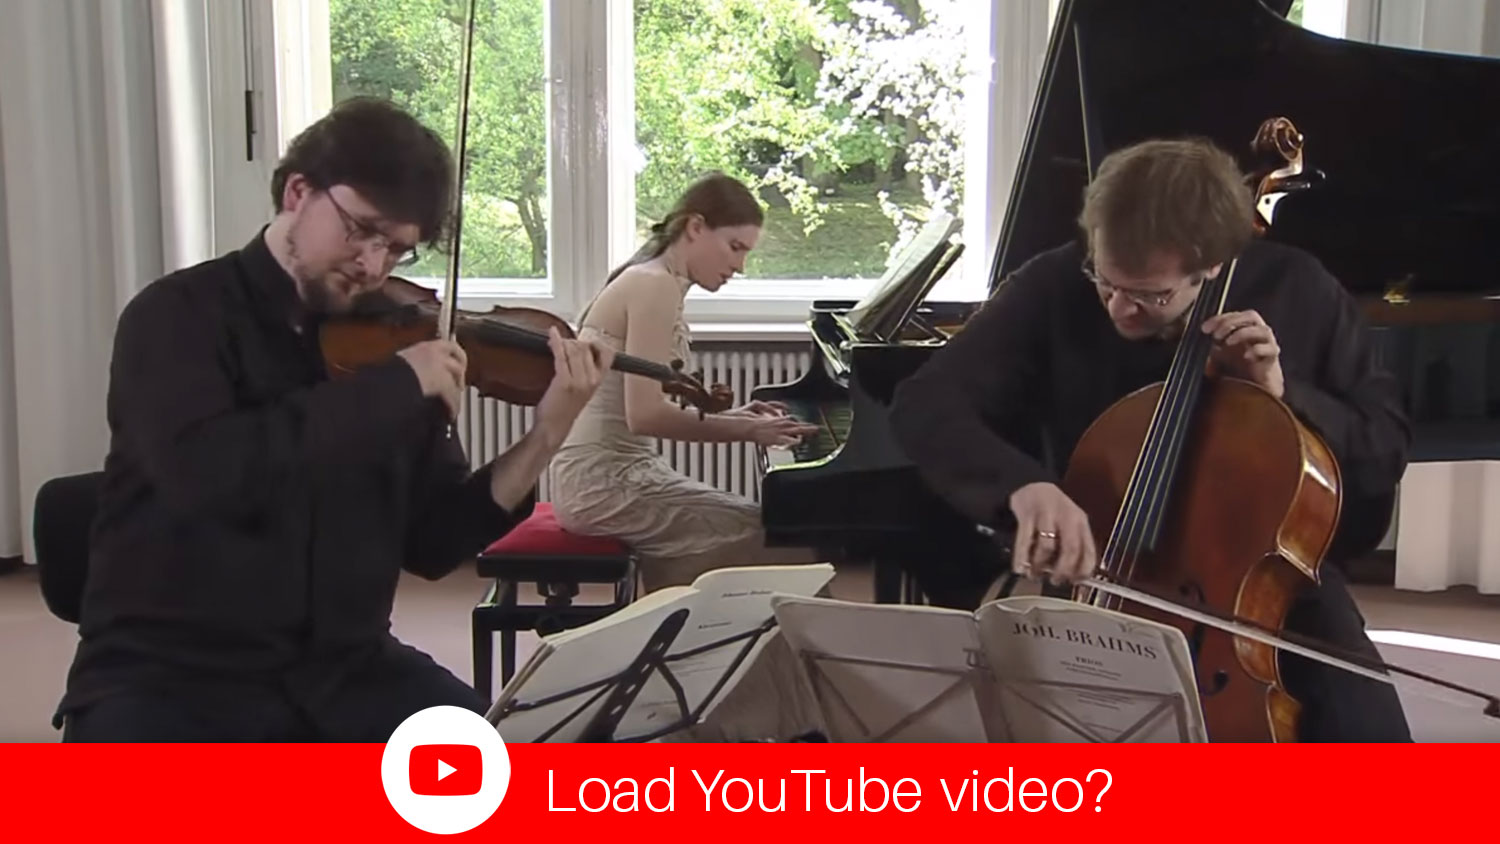 YouTube Video Morgenstern Trio - Brahms Piano Trio in C Major Op. 87